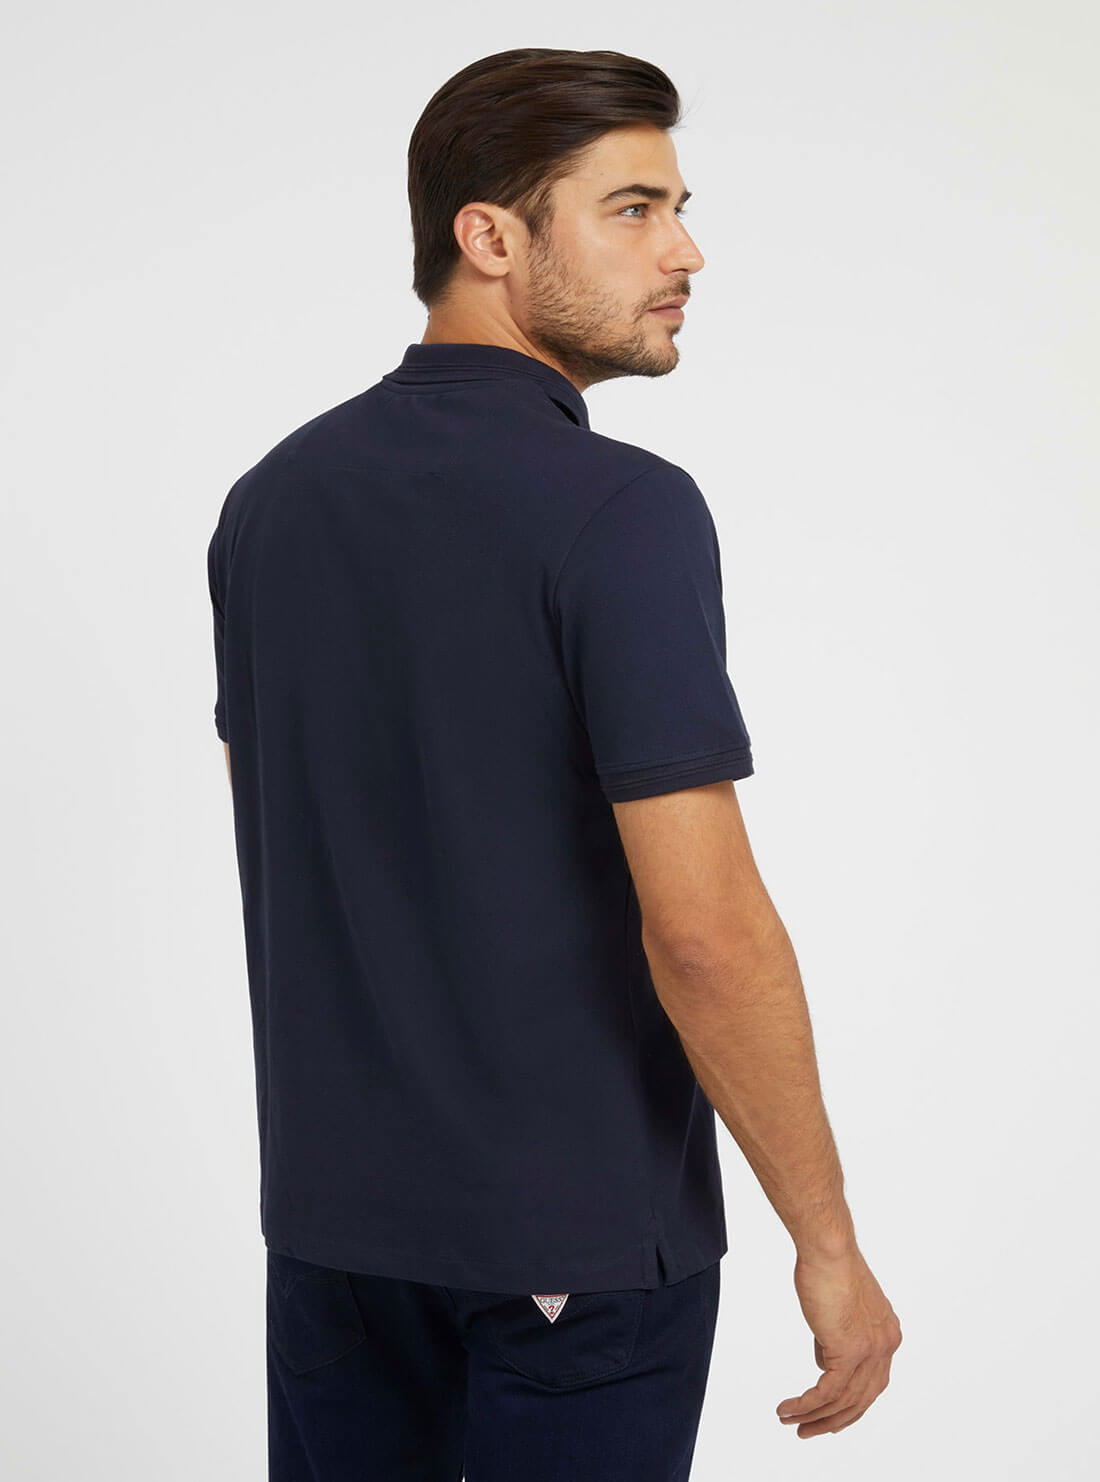 Navy Blue Lyle Polo T-Shirt | GUESS Men's Apparel | back view